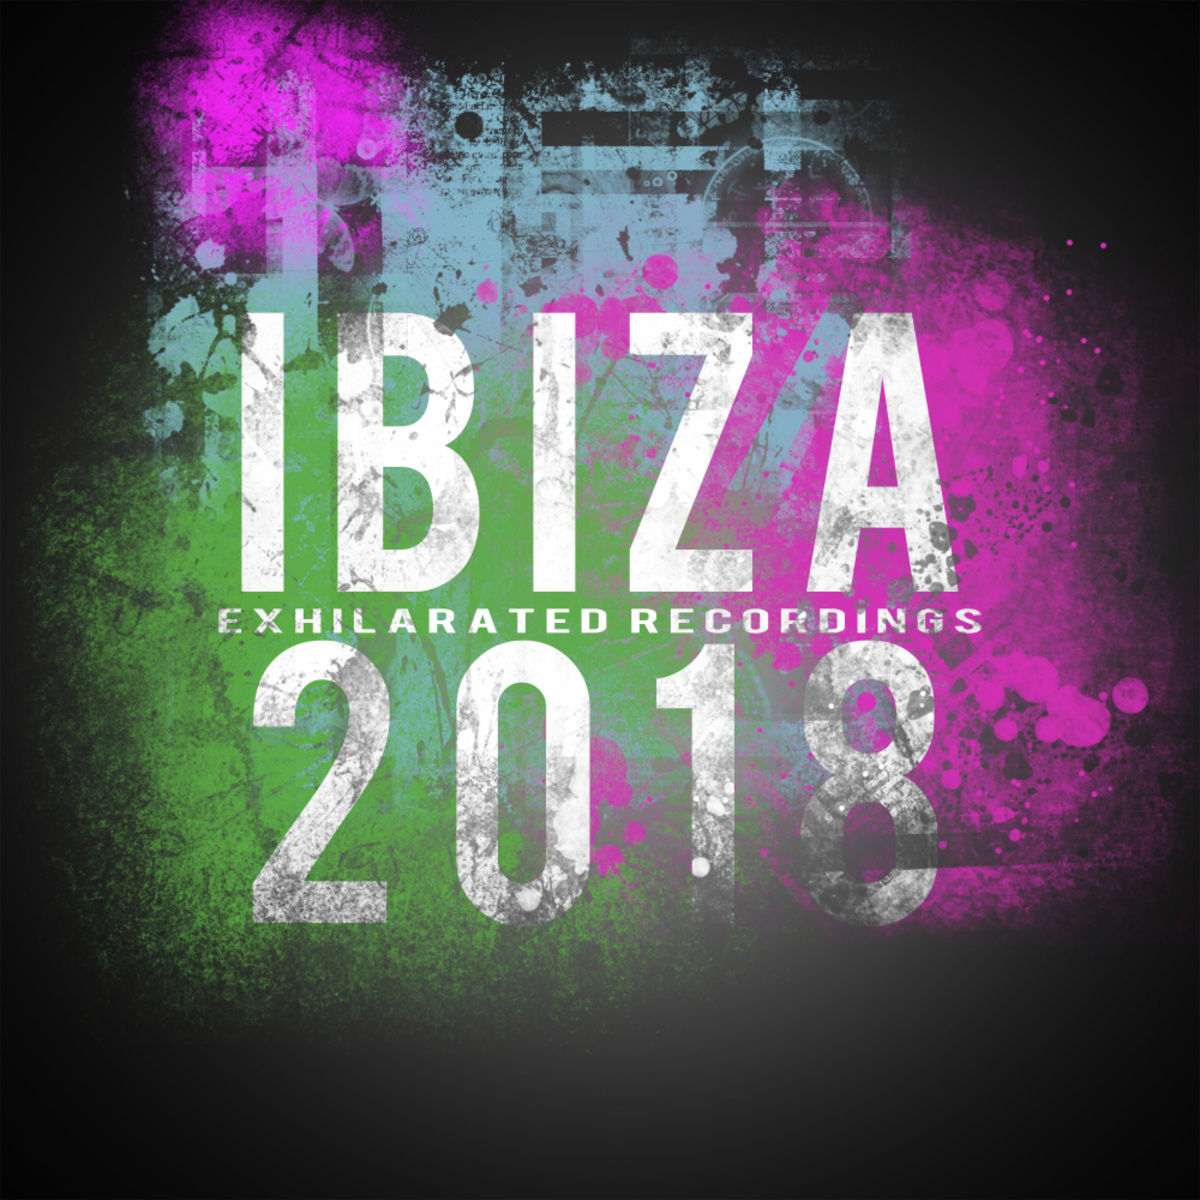 VA - Exhilarated Recordings Ibiza 2018 / Exhilarated Recordings